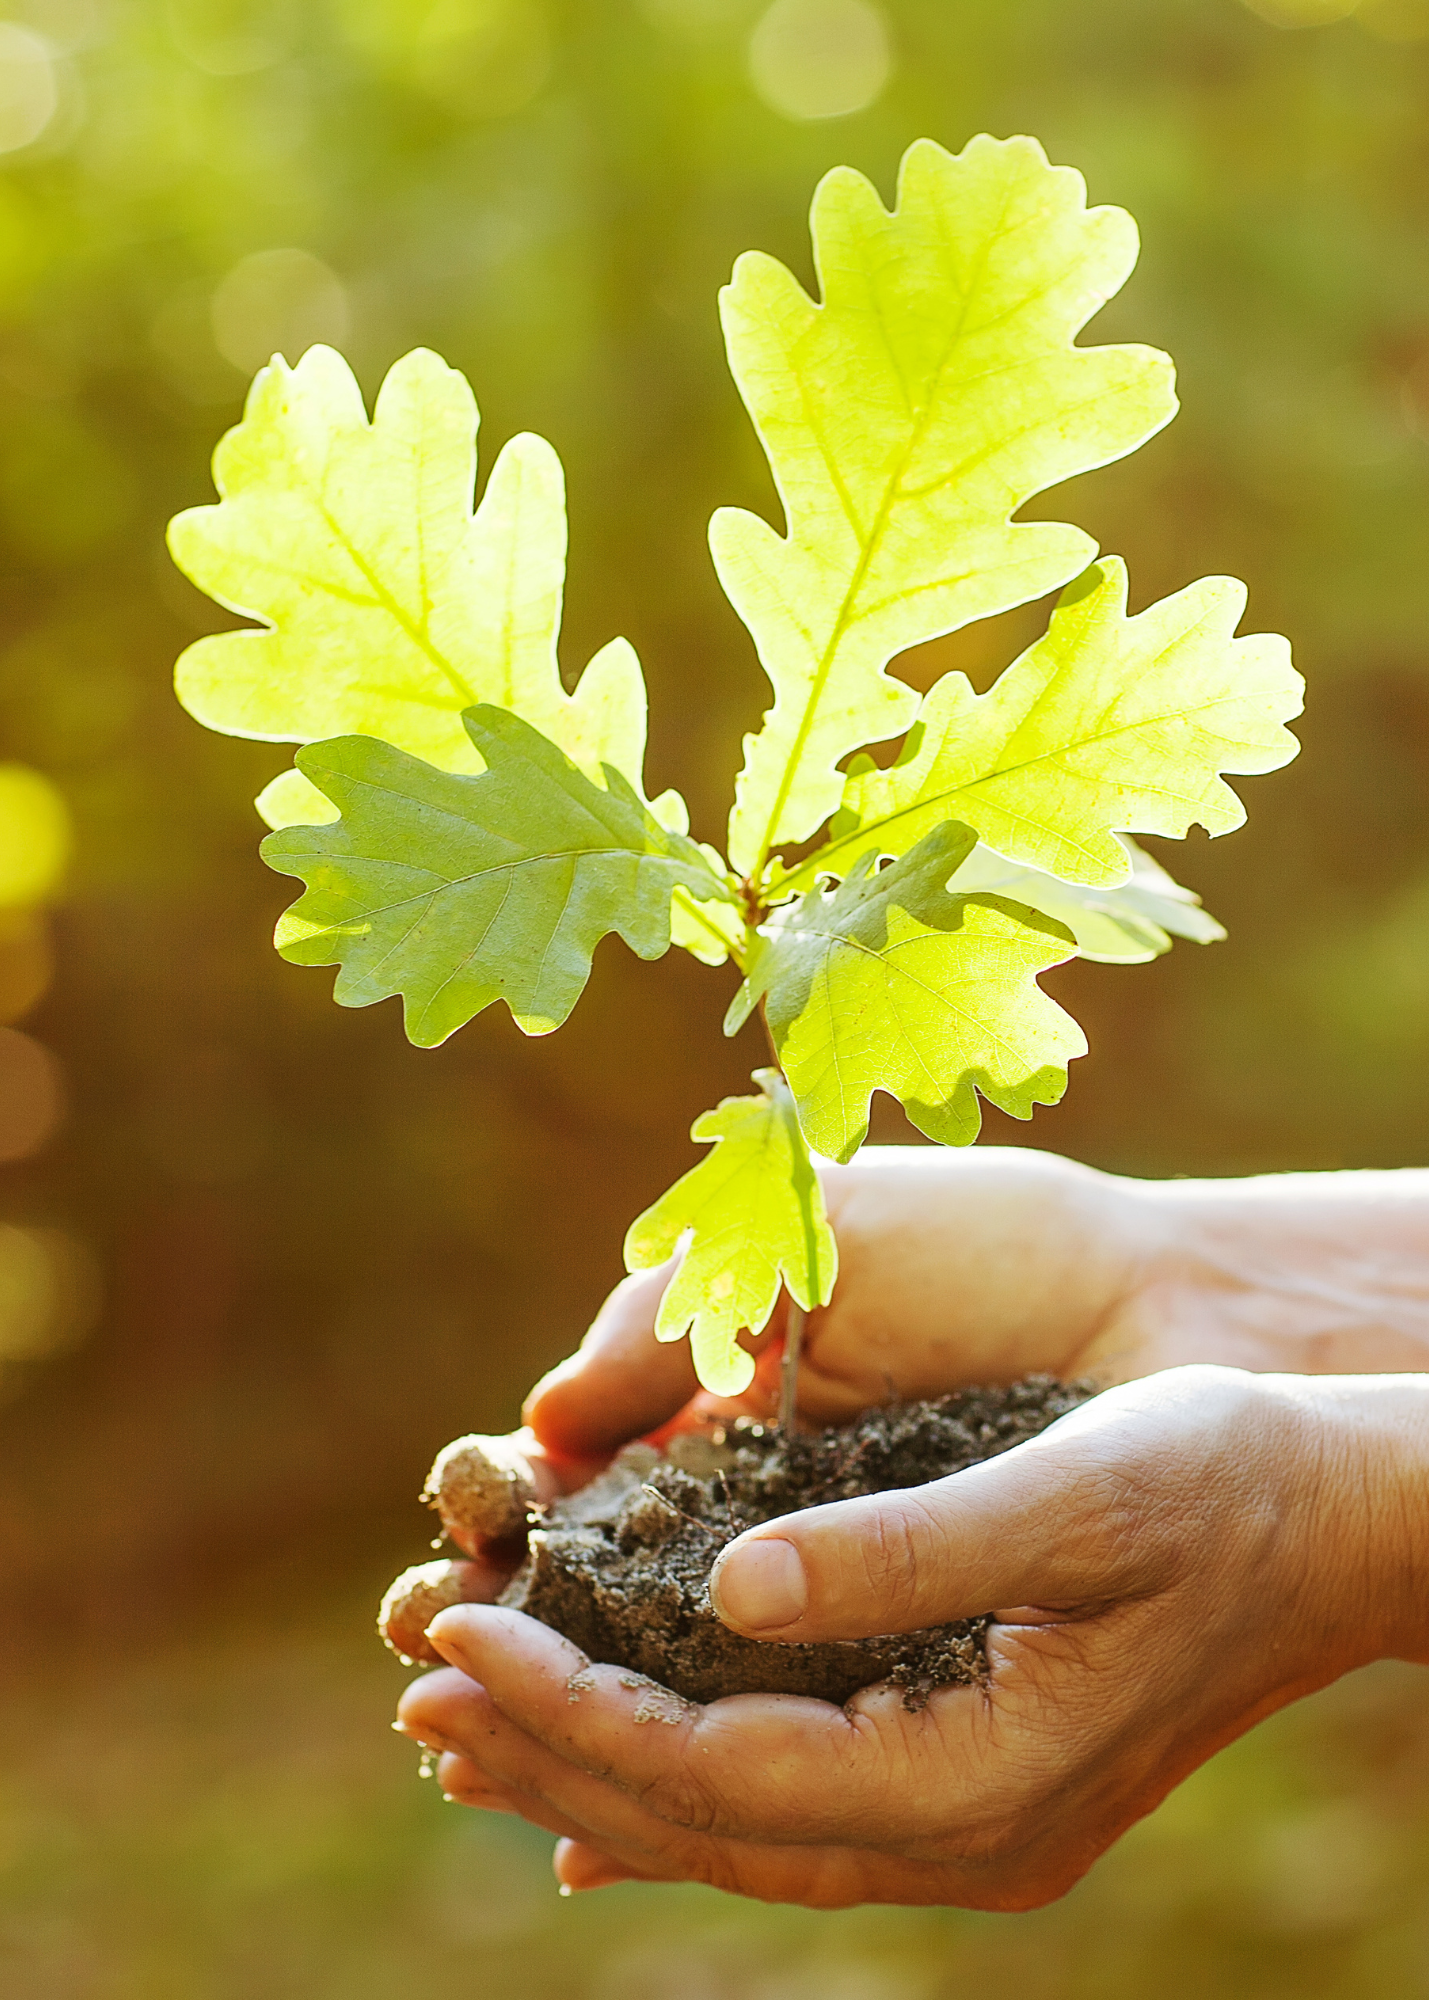 Help mitigate climate change with Unique Hardwood flooring - oak tree seedling image